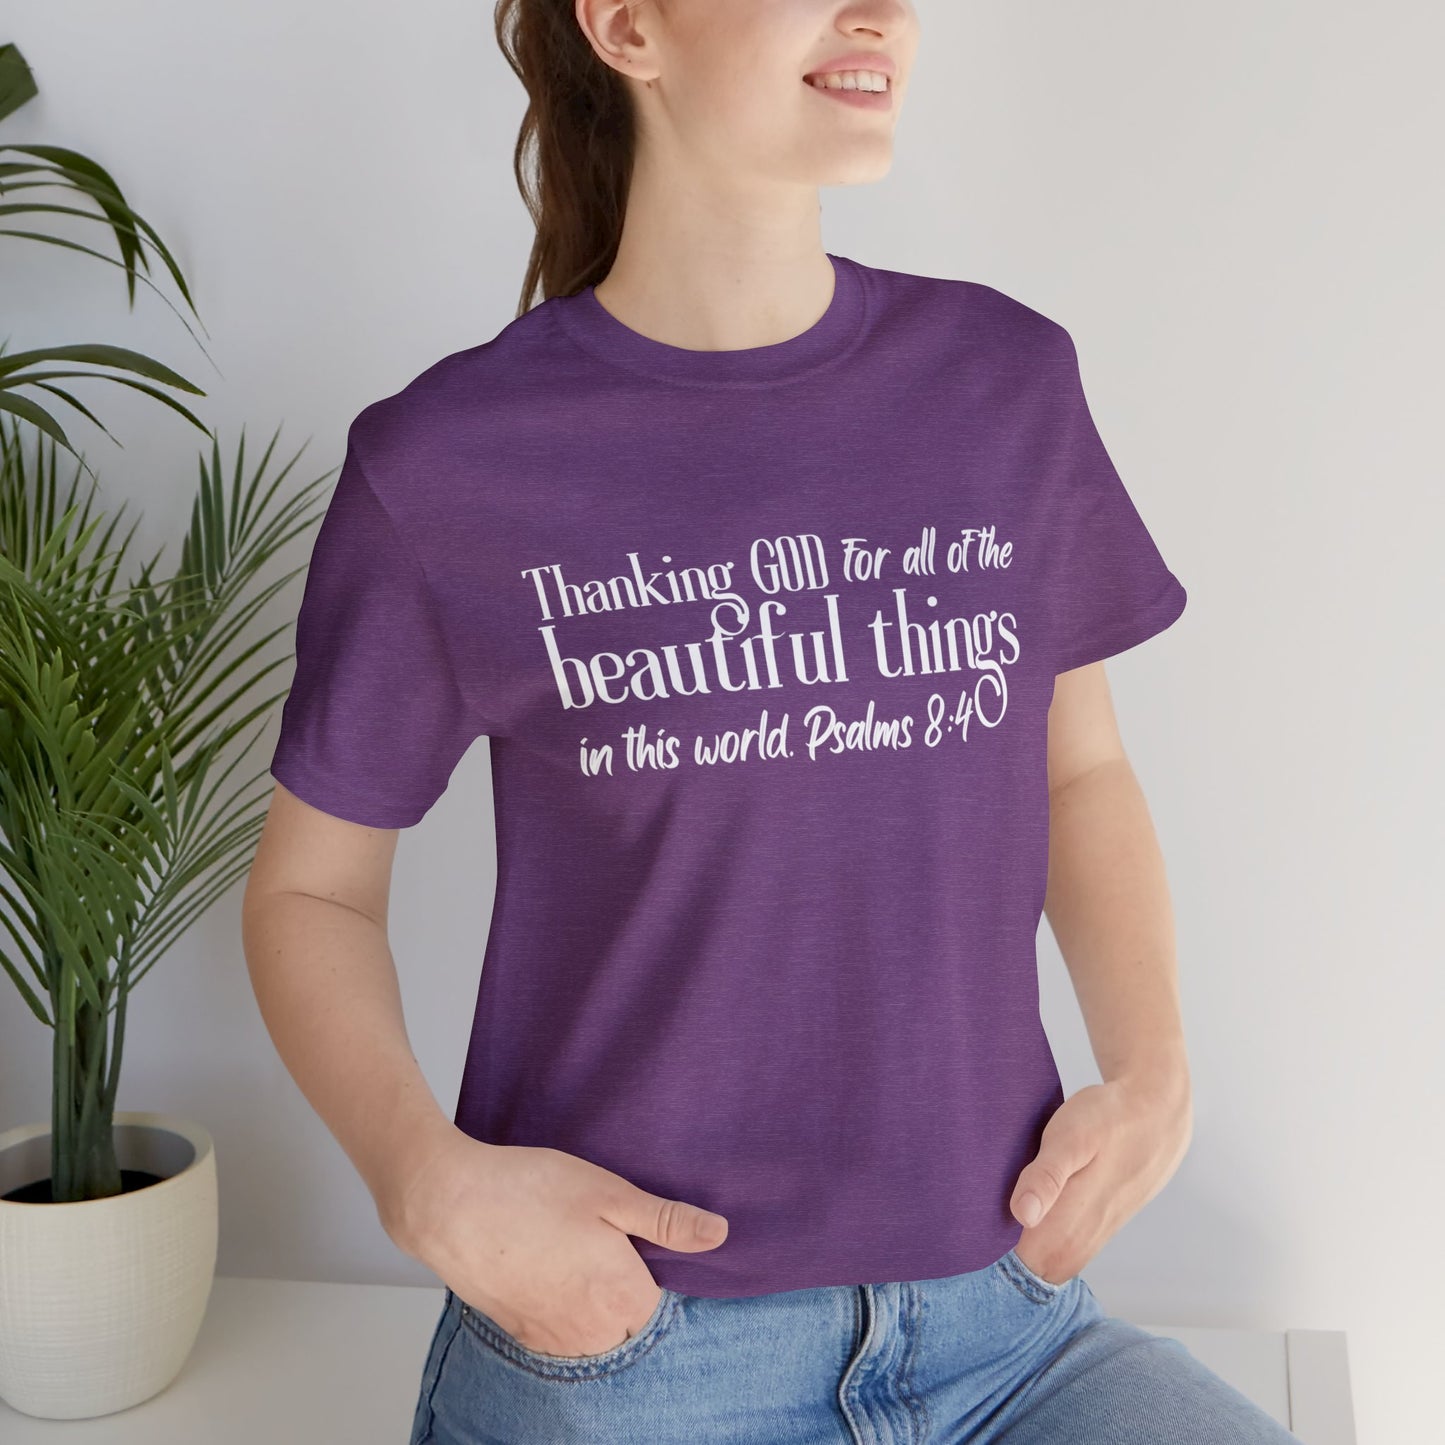 Psalms 8:4 Beautiful Things, Christian T-shirt for Men and Women